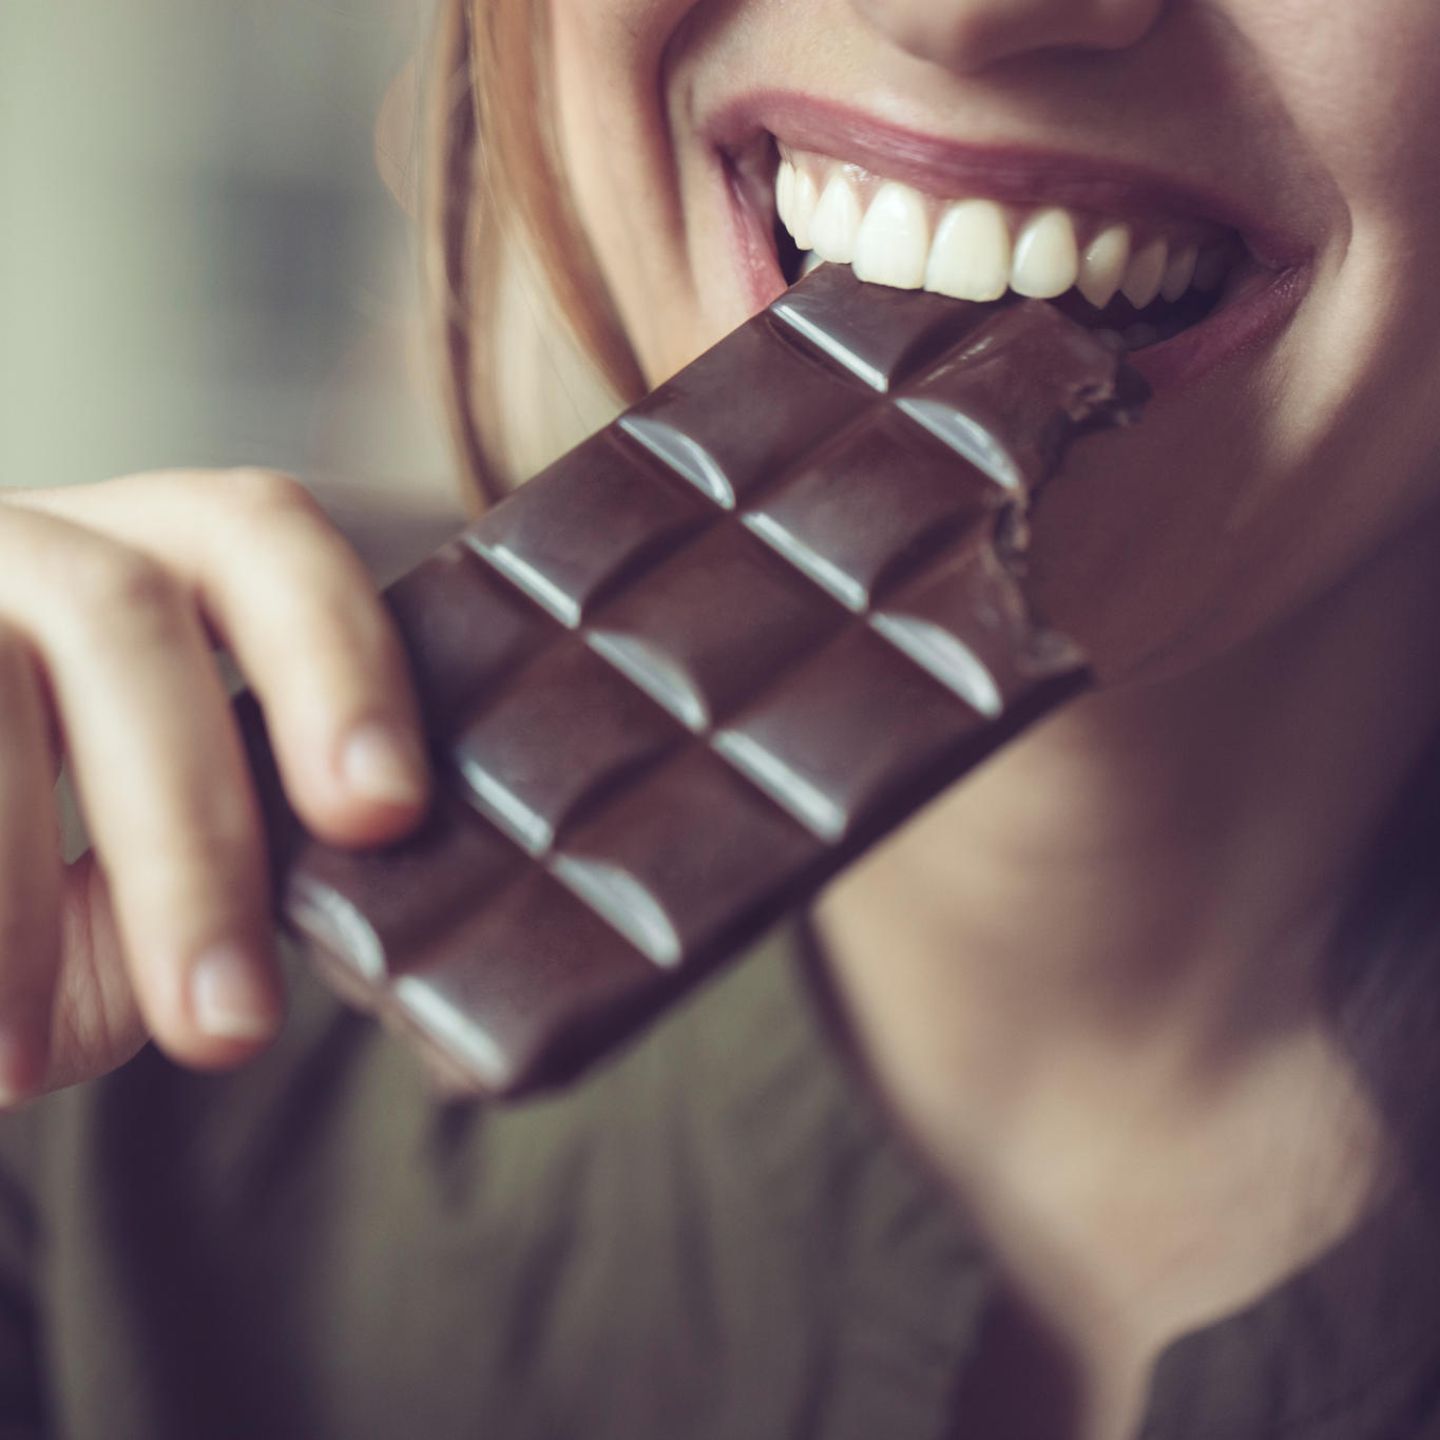 Warentest Pruft Dunkle Schokolade Ausgerechnet Faires Produkt Schneidet Schlecht Ab Stern De